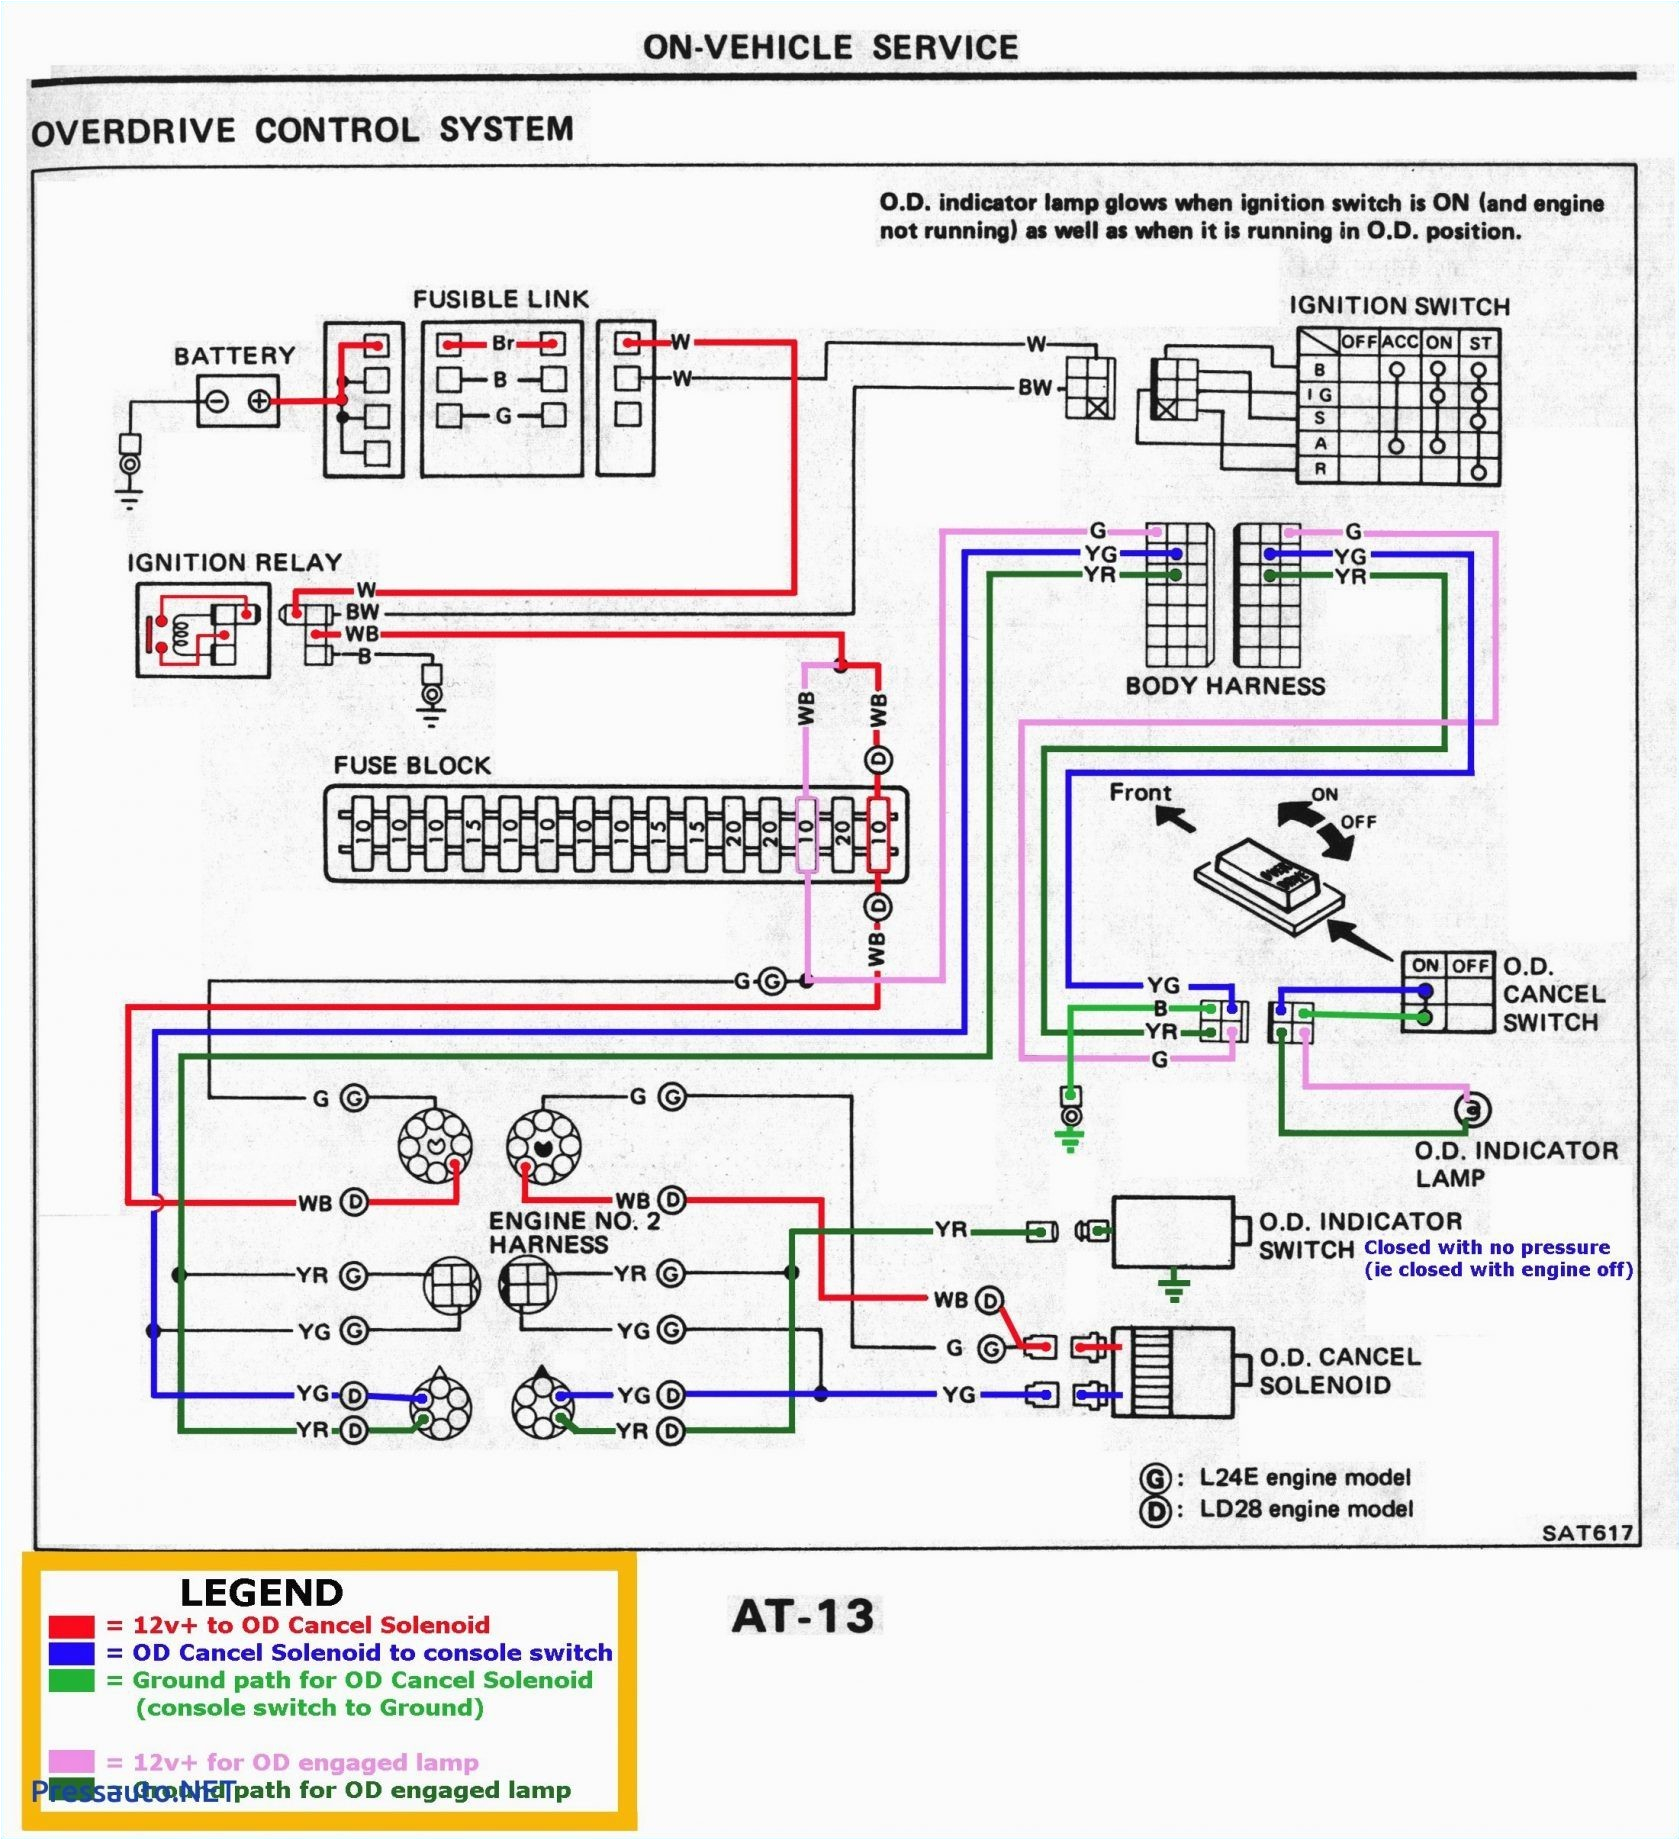 20 pin pin out subaru radio and radio wiring harness caroldoey pin out wiring diagram